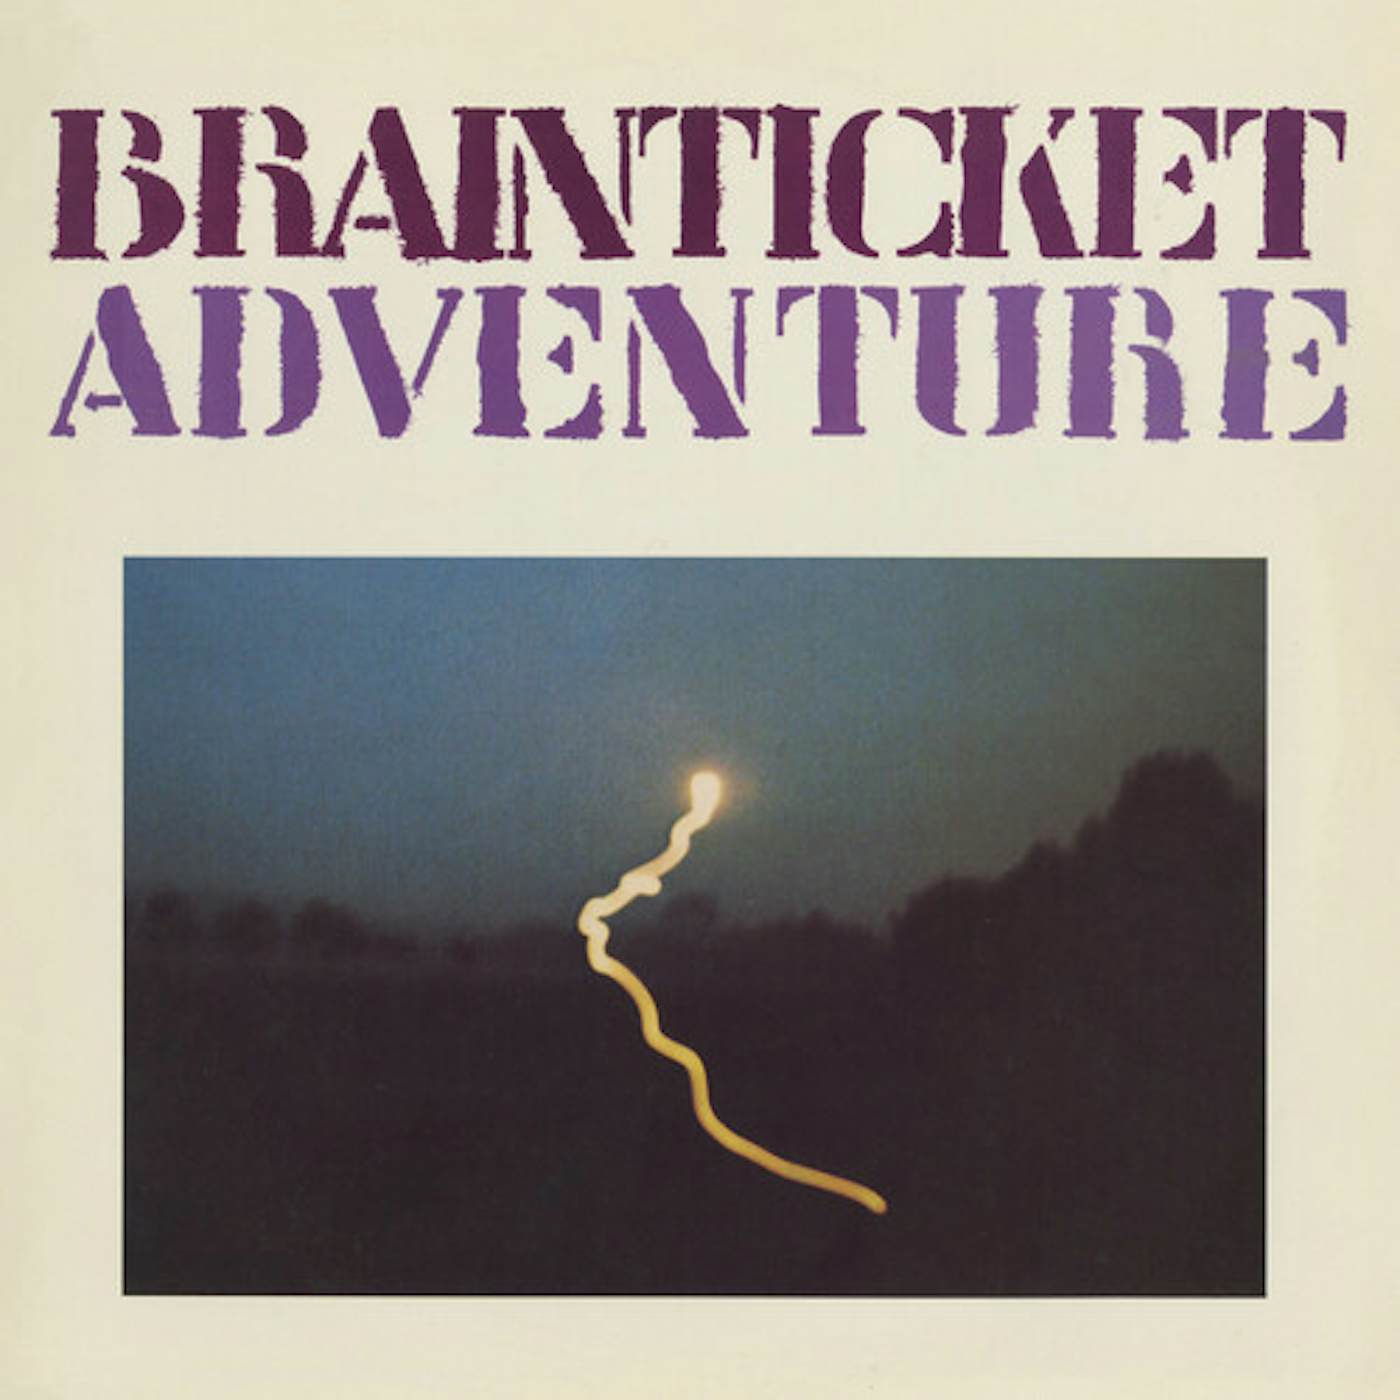 Brainticket Adventure Vinyl Record